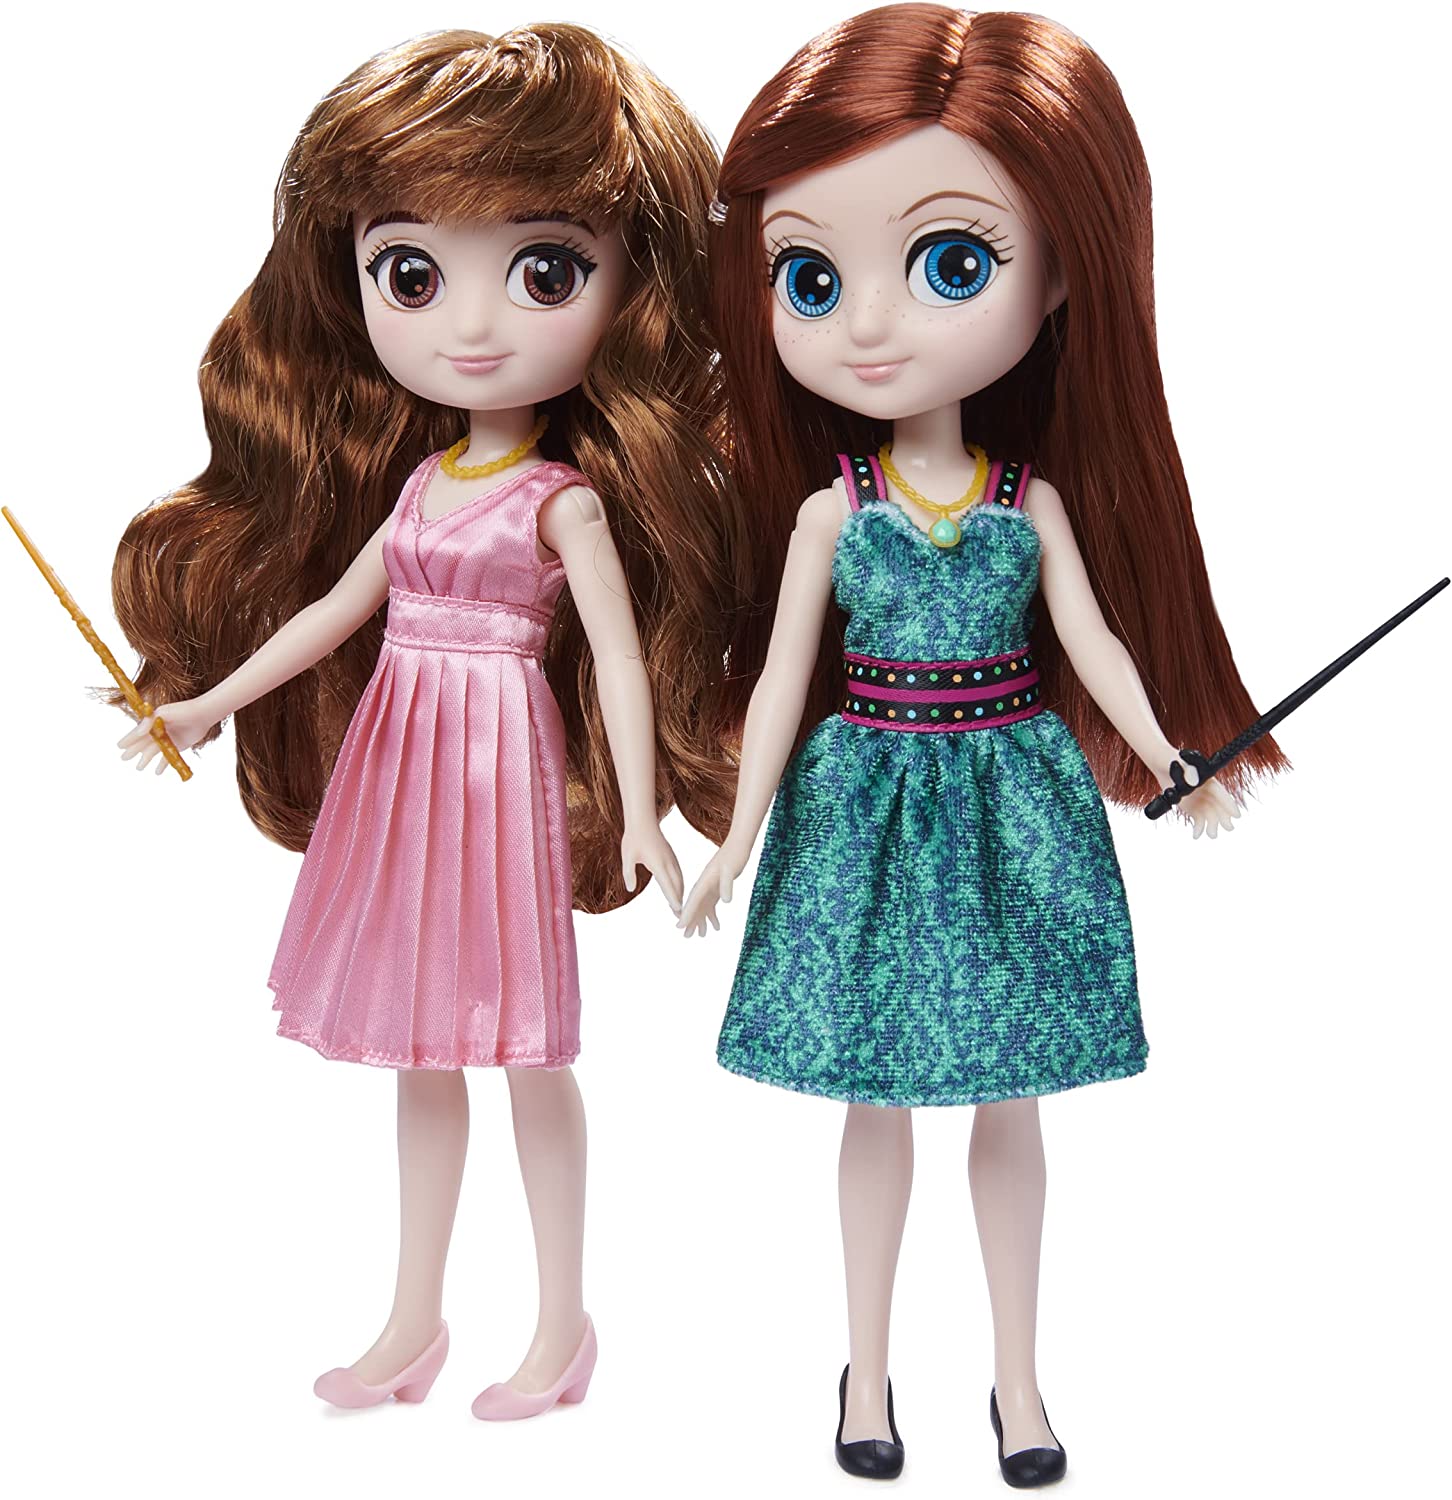 New Release 2021 HARRY POTTER Wizarding World HERMIONE GRANGER Dolls VHTF Set 